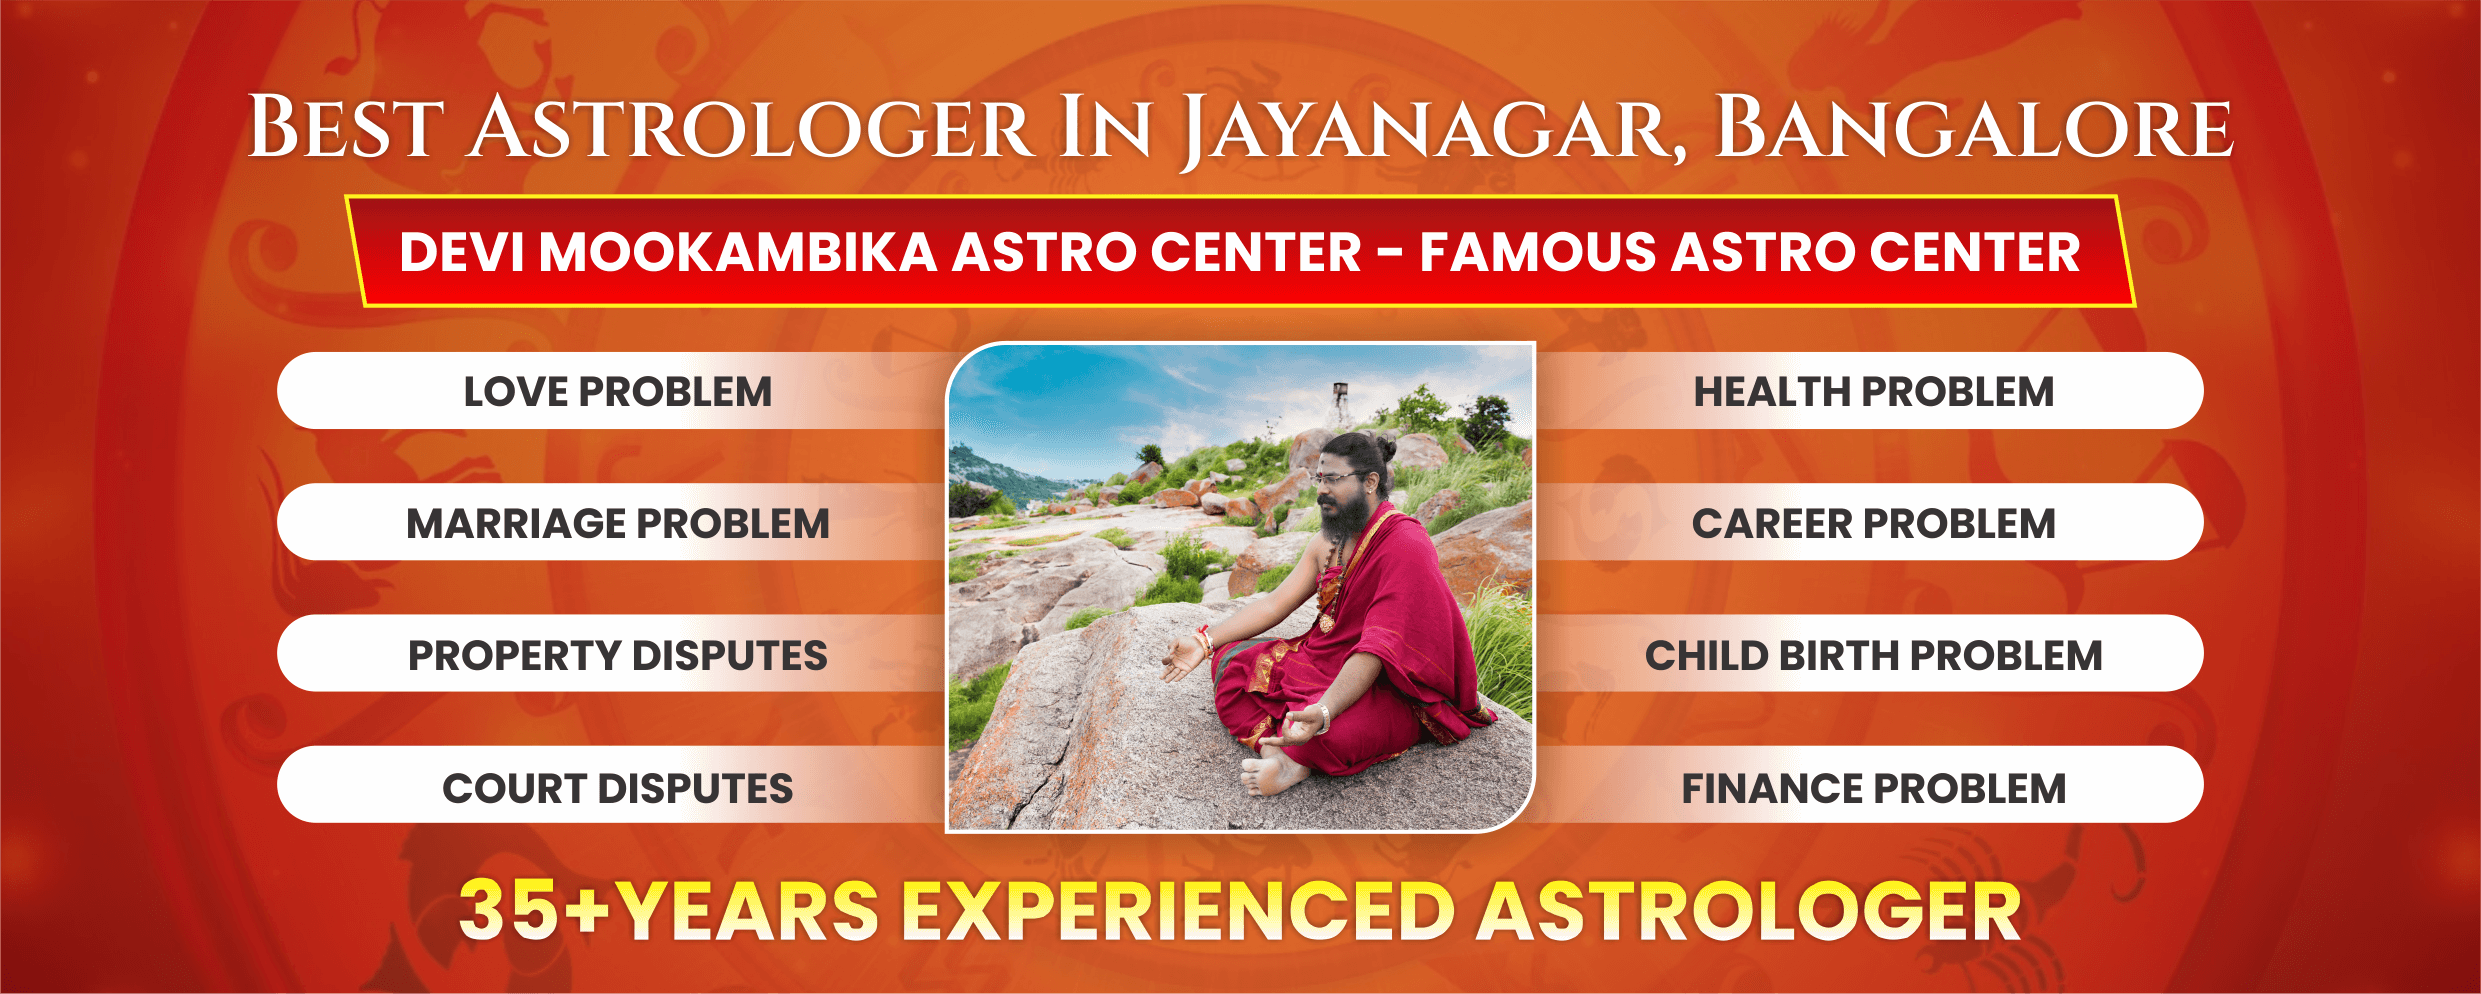 Best Astrologer in Jayanagar Bangalore